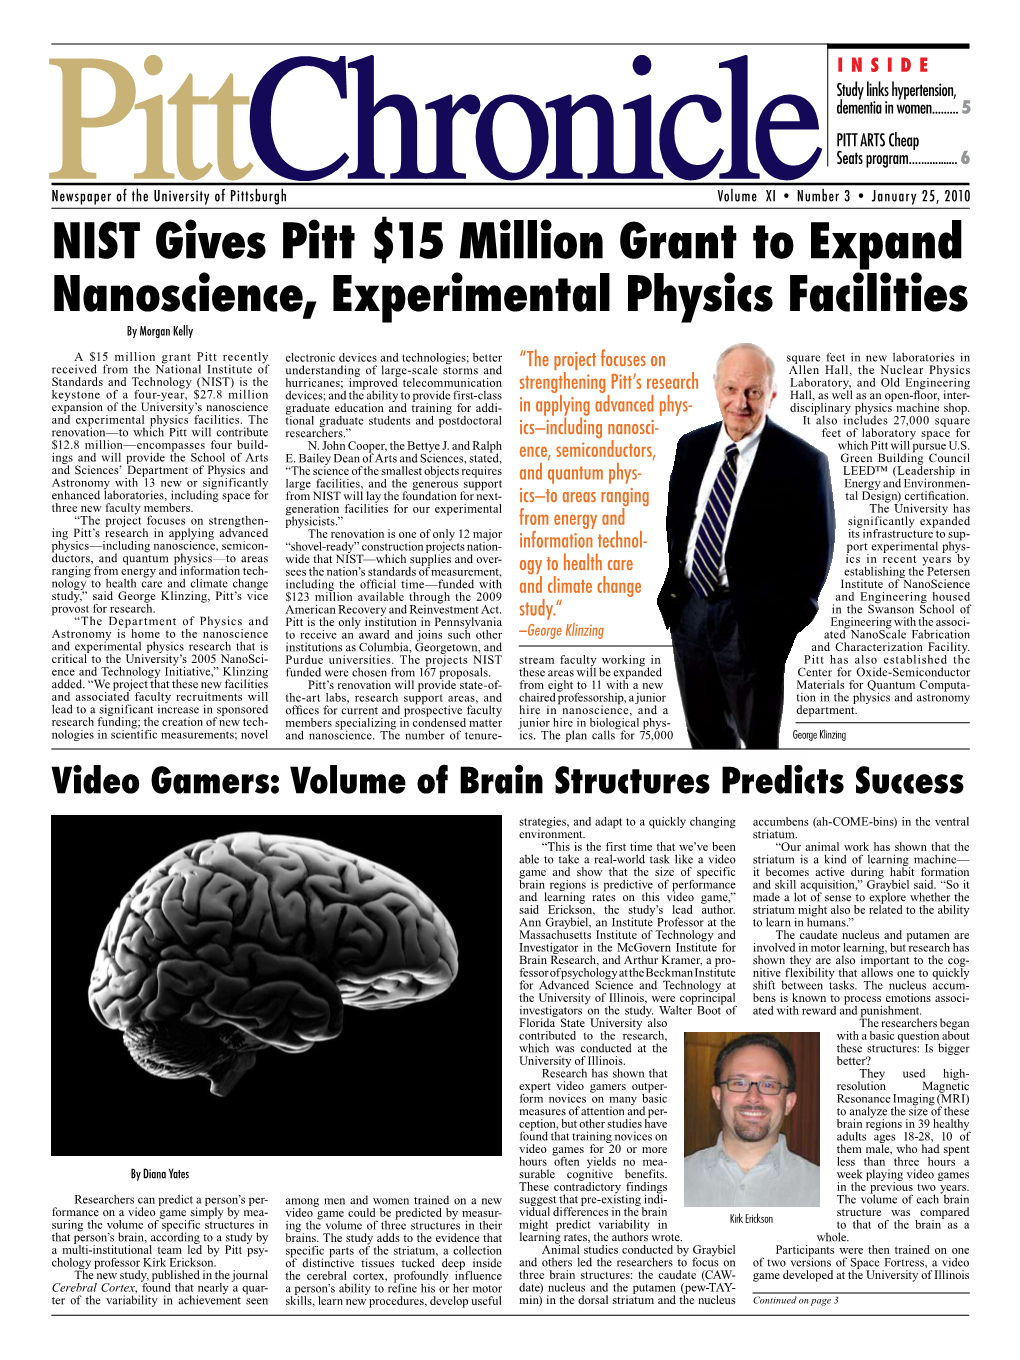 NIST Gives Pitt $15 Million Grant to Expand Nanoscience, Experimental Physics Facilities by Morgan Kelly